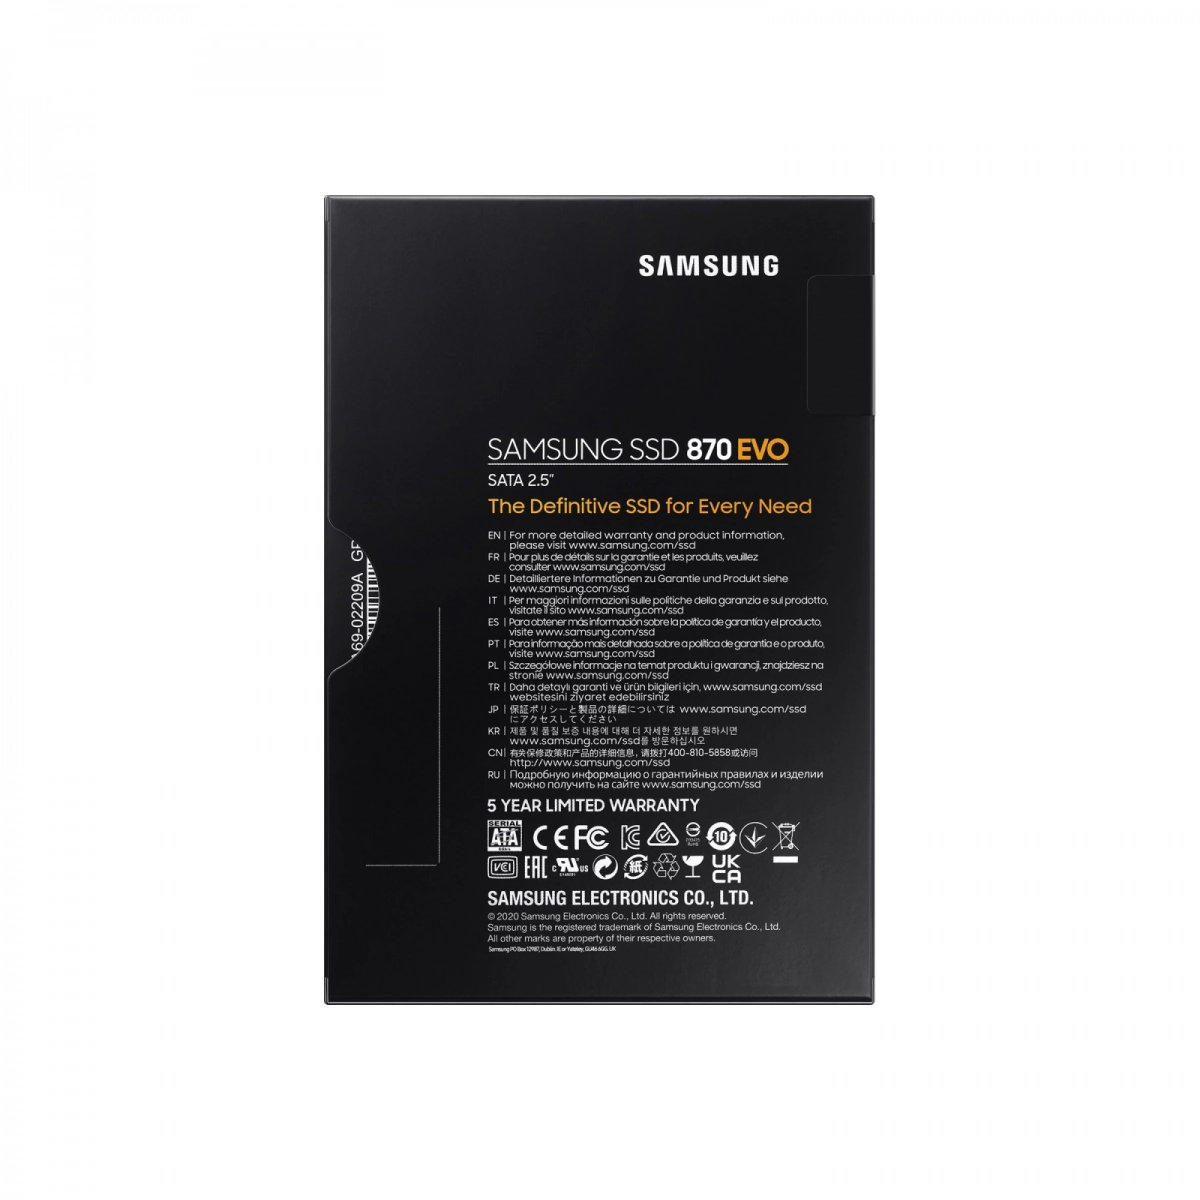 Notebook-Festplatte 500GB, SSD SATA3 MLC für LENOVO ThinkPad E470 20H1, 20H2